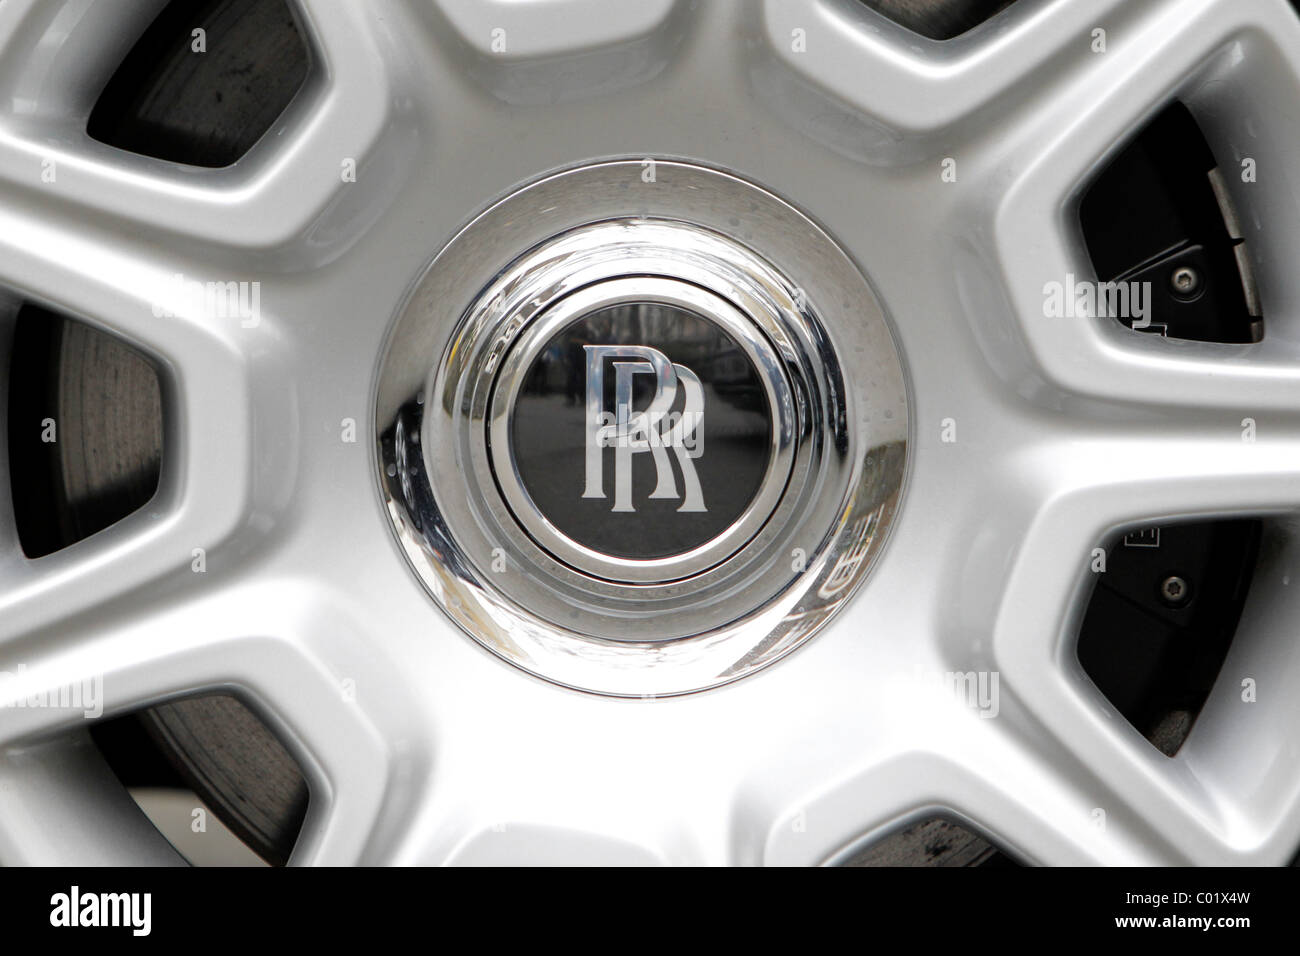 A Rolls Royce badge on a car wheel Stock Photo